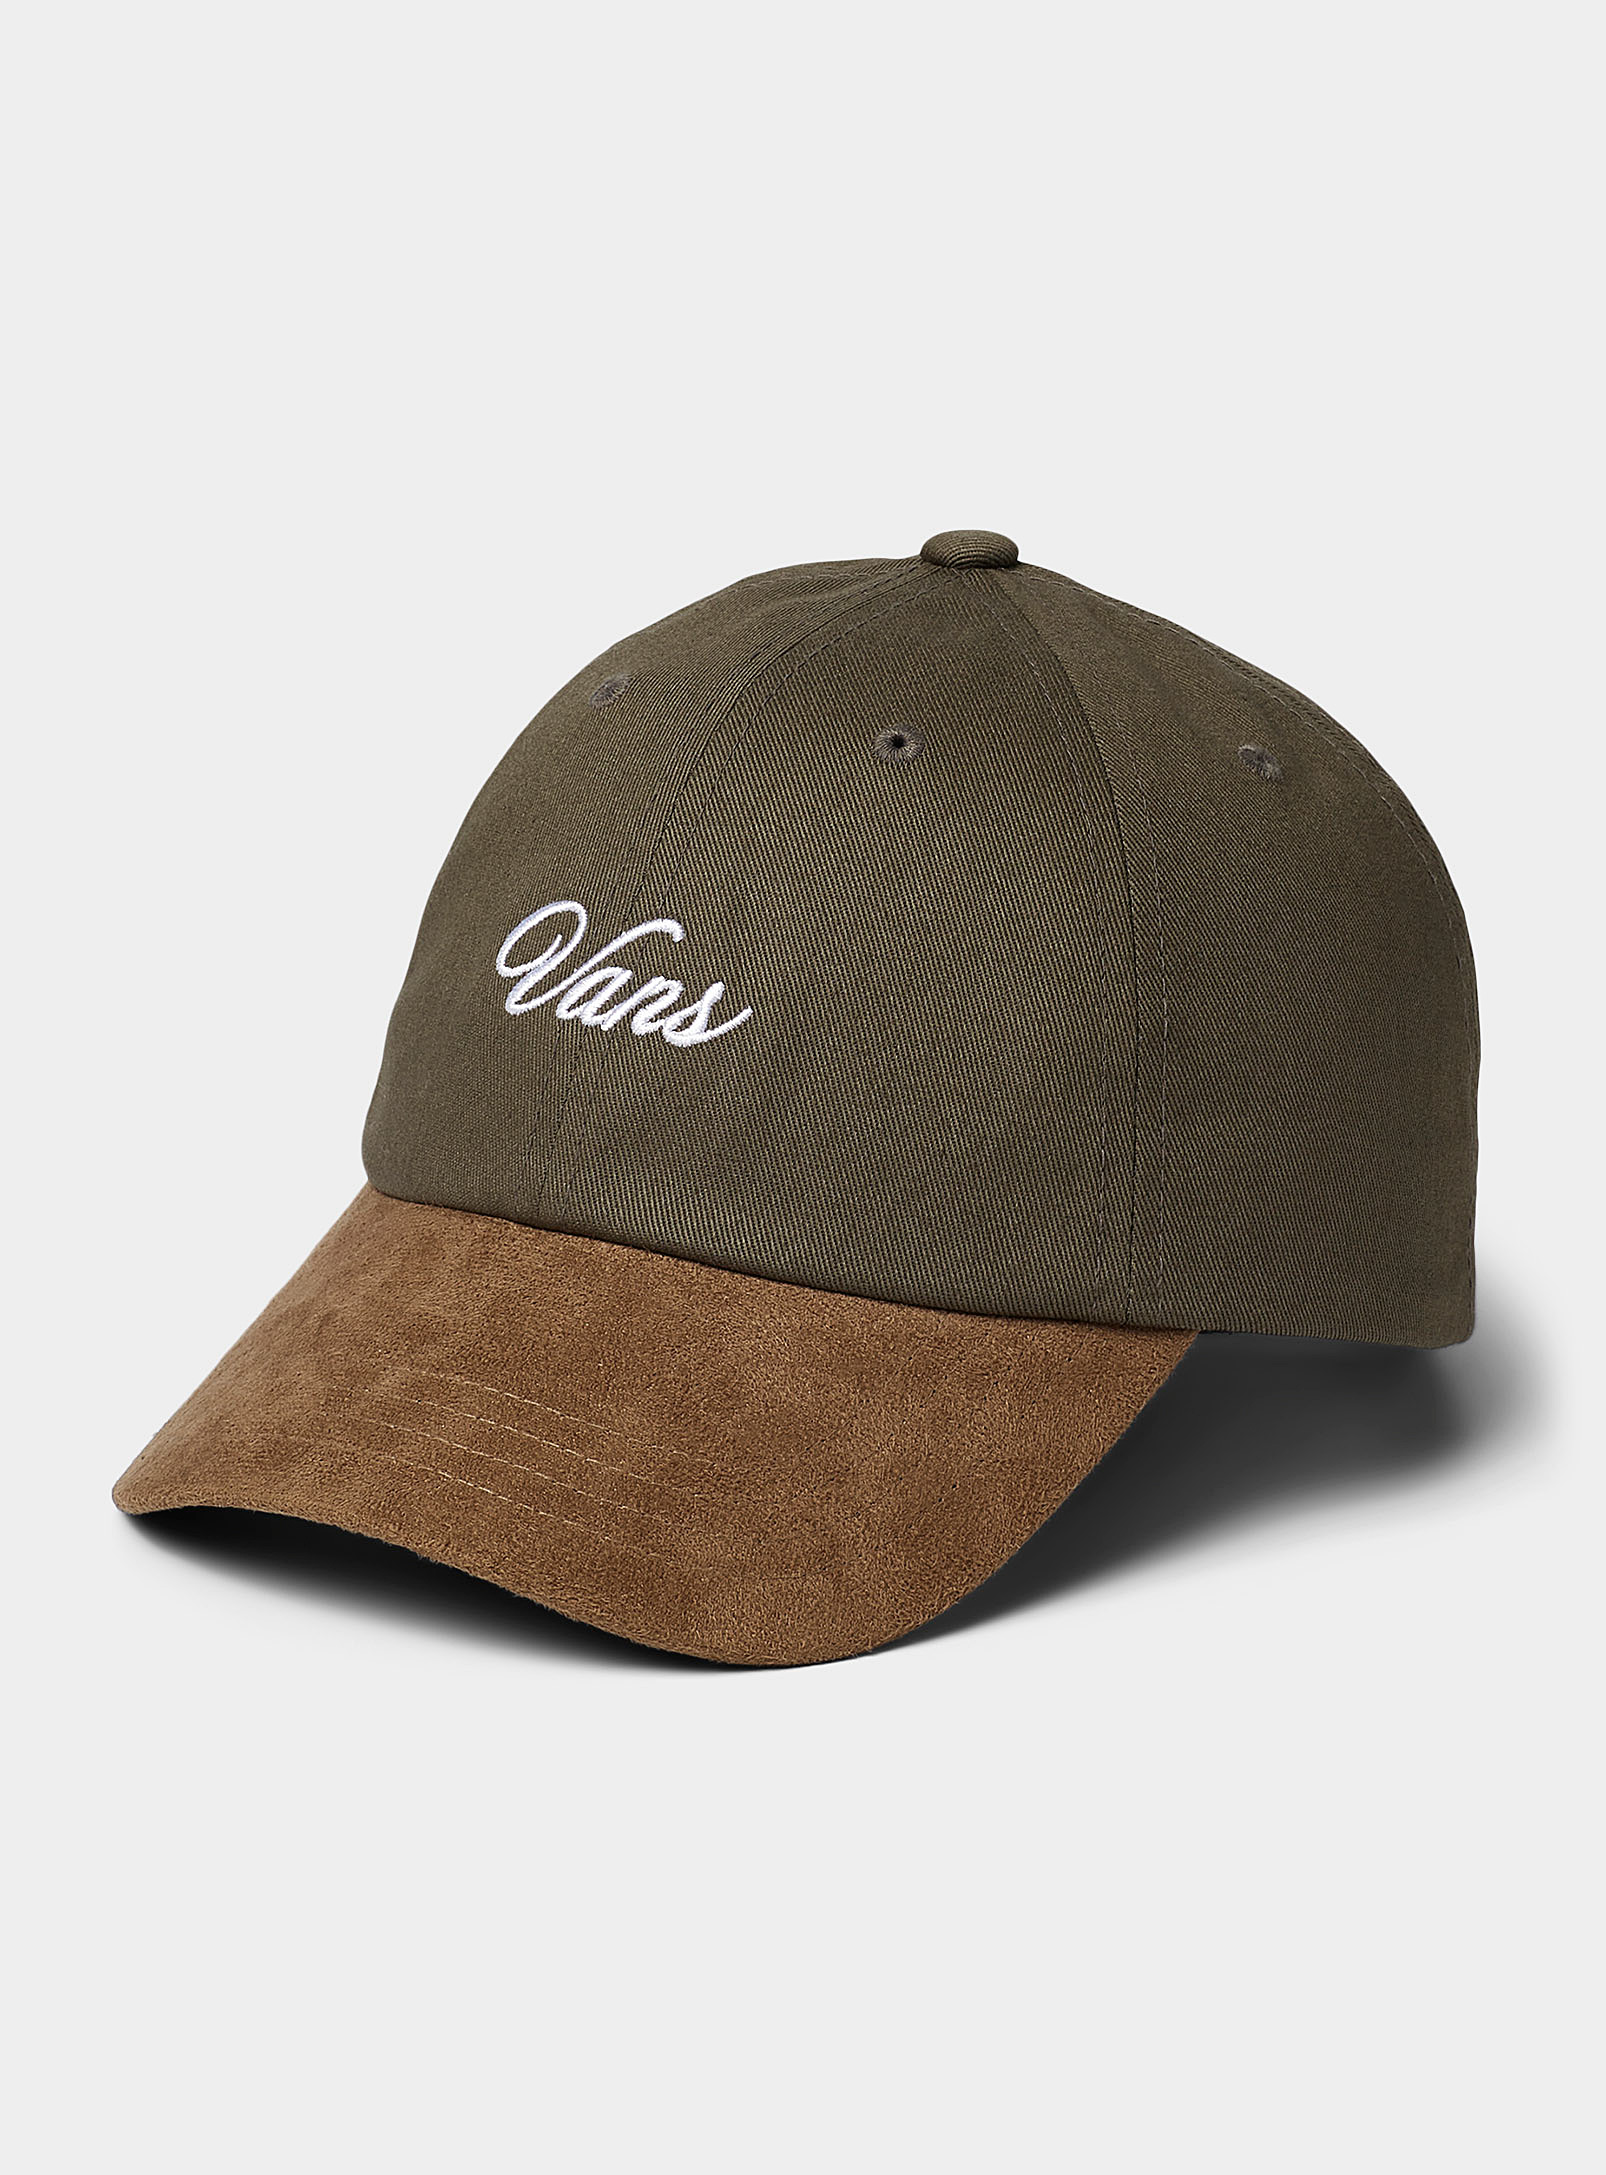 Vans - Men's Embroidered logo suede visor cap